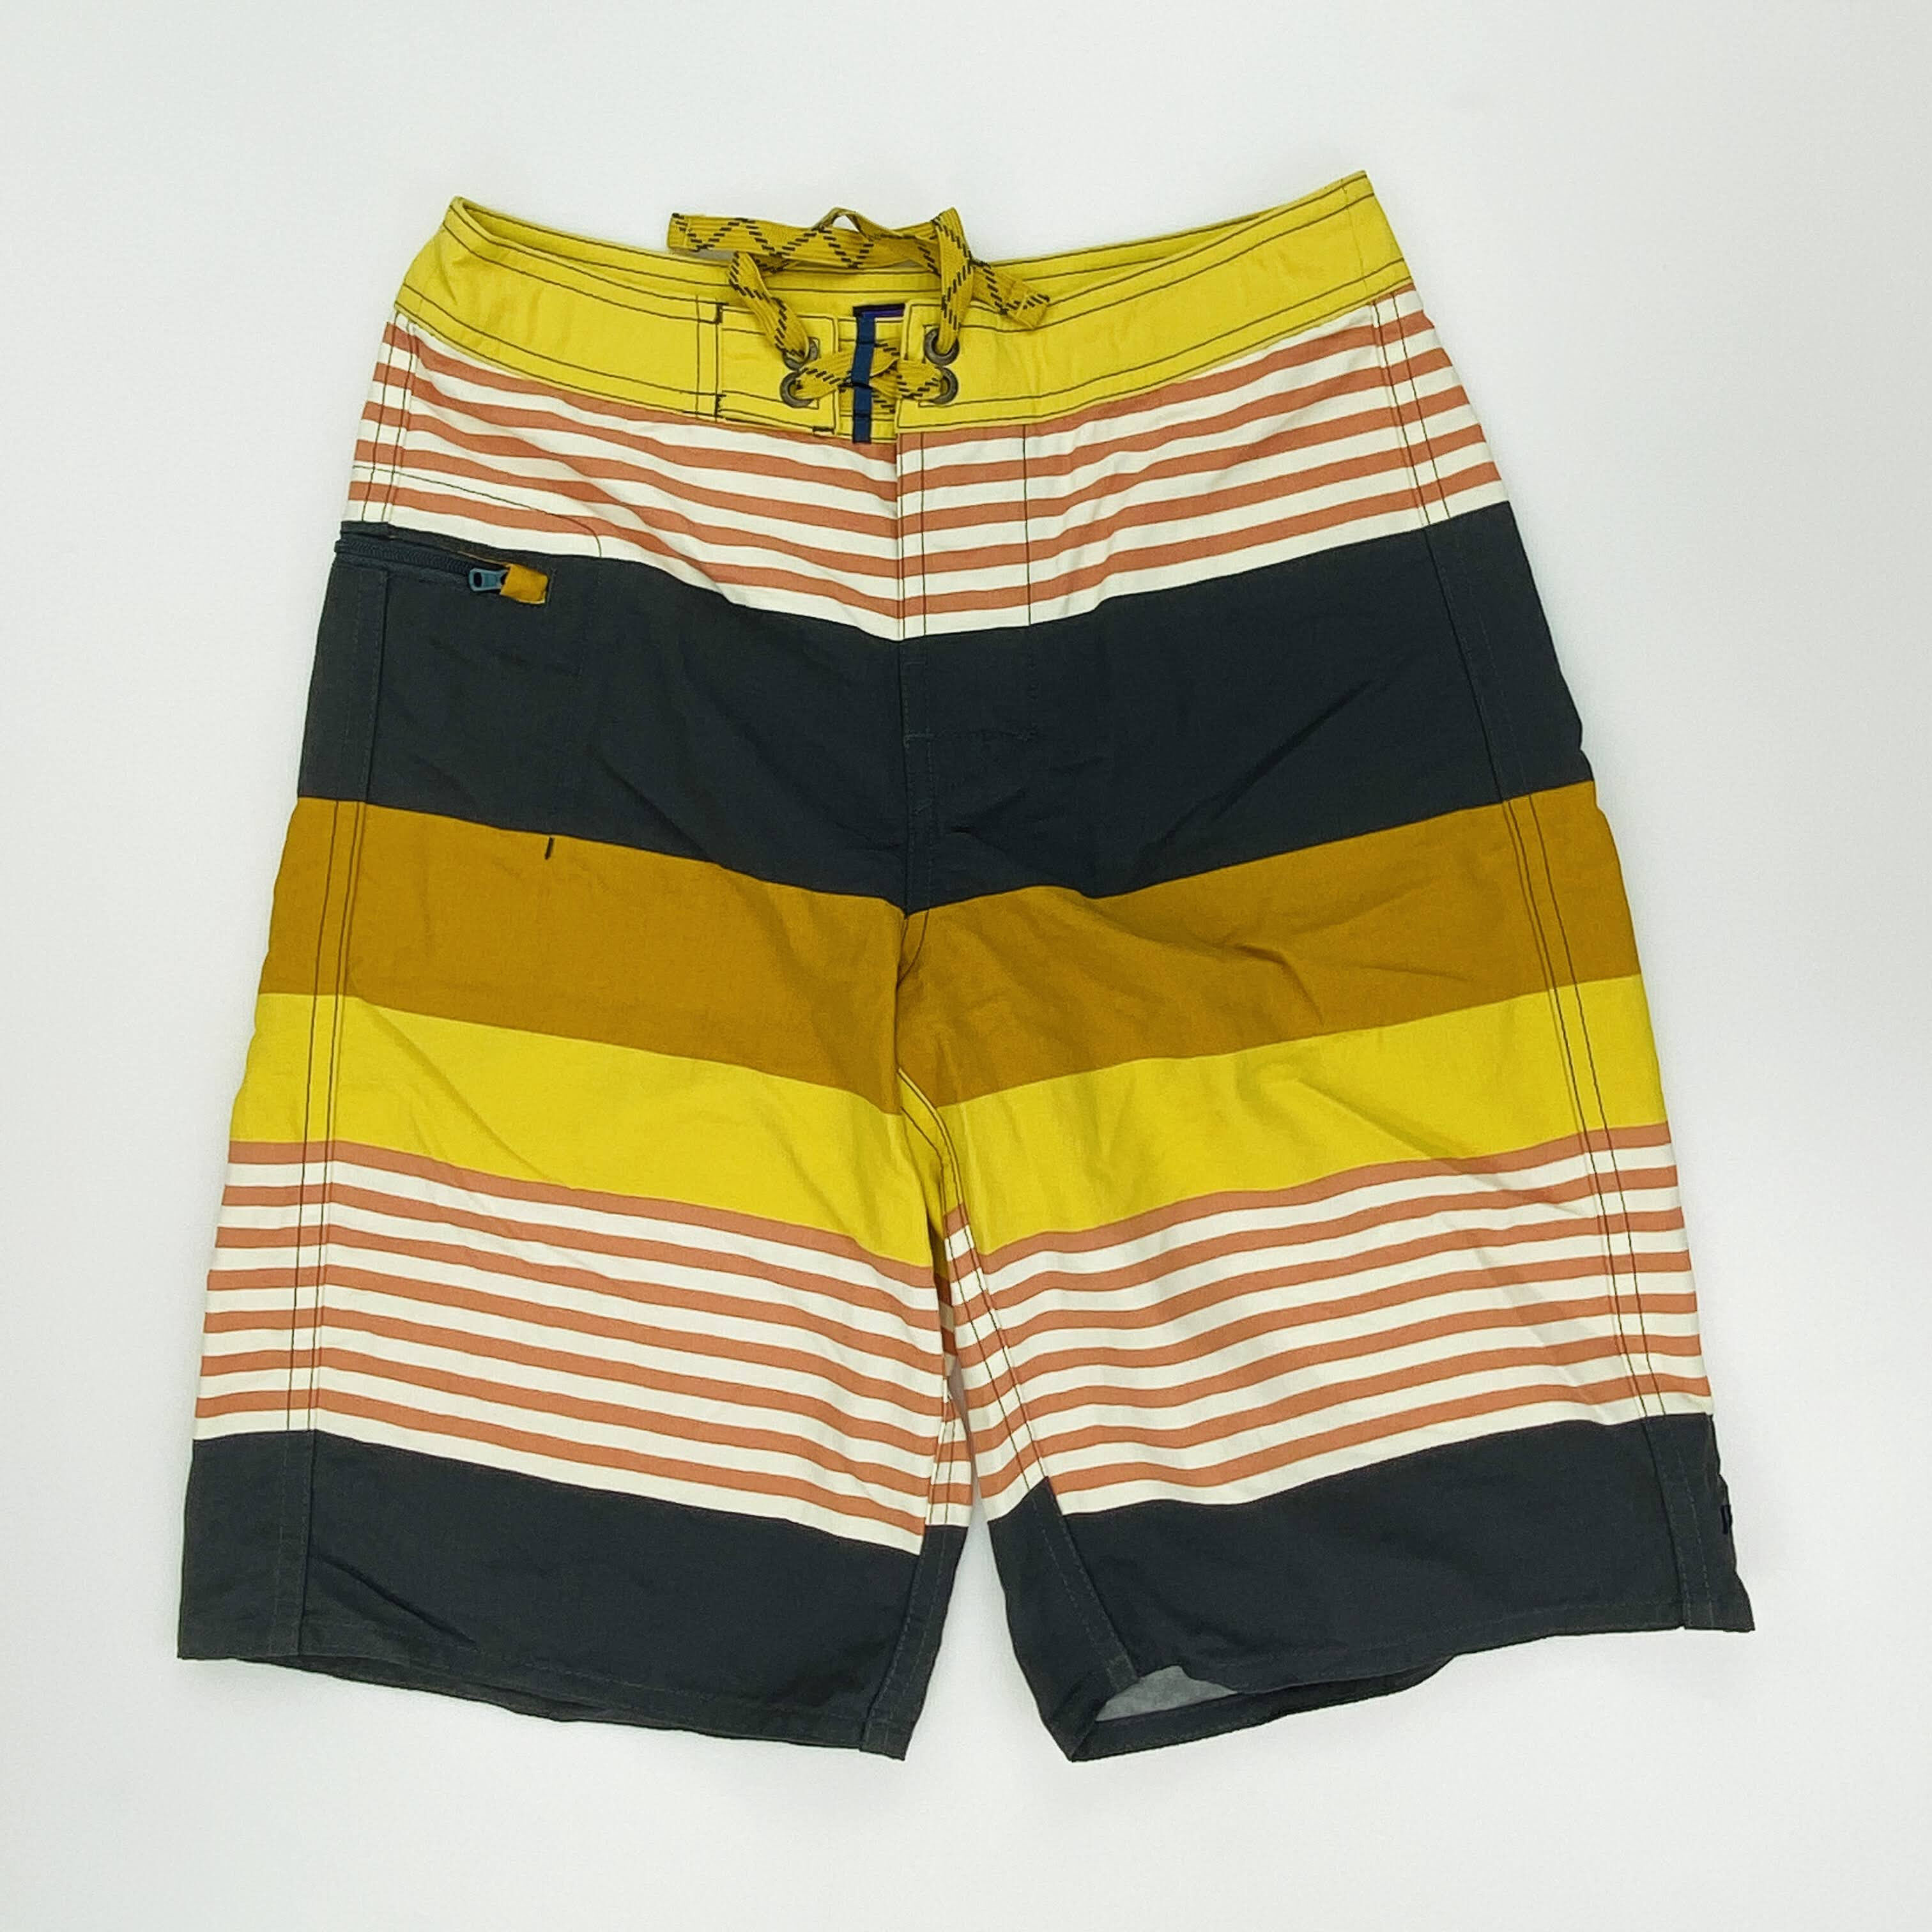 Patagonia Boys' Wavefarer Boardshorts - Second Hand Shorts - Kind - Mehrfarbig - 10 Jahre alt | Hardloop